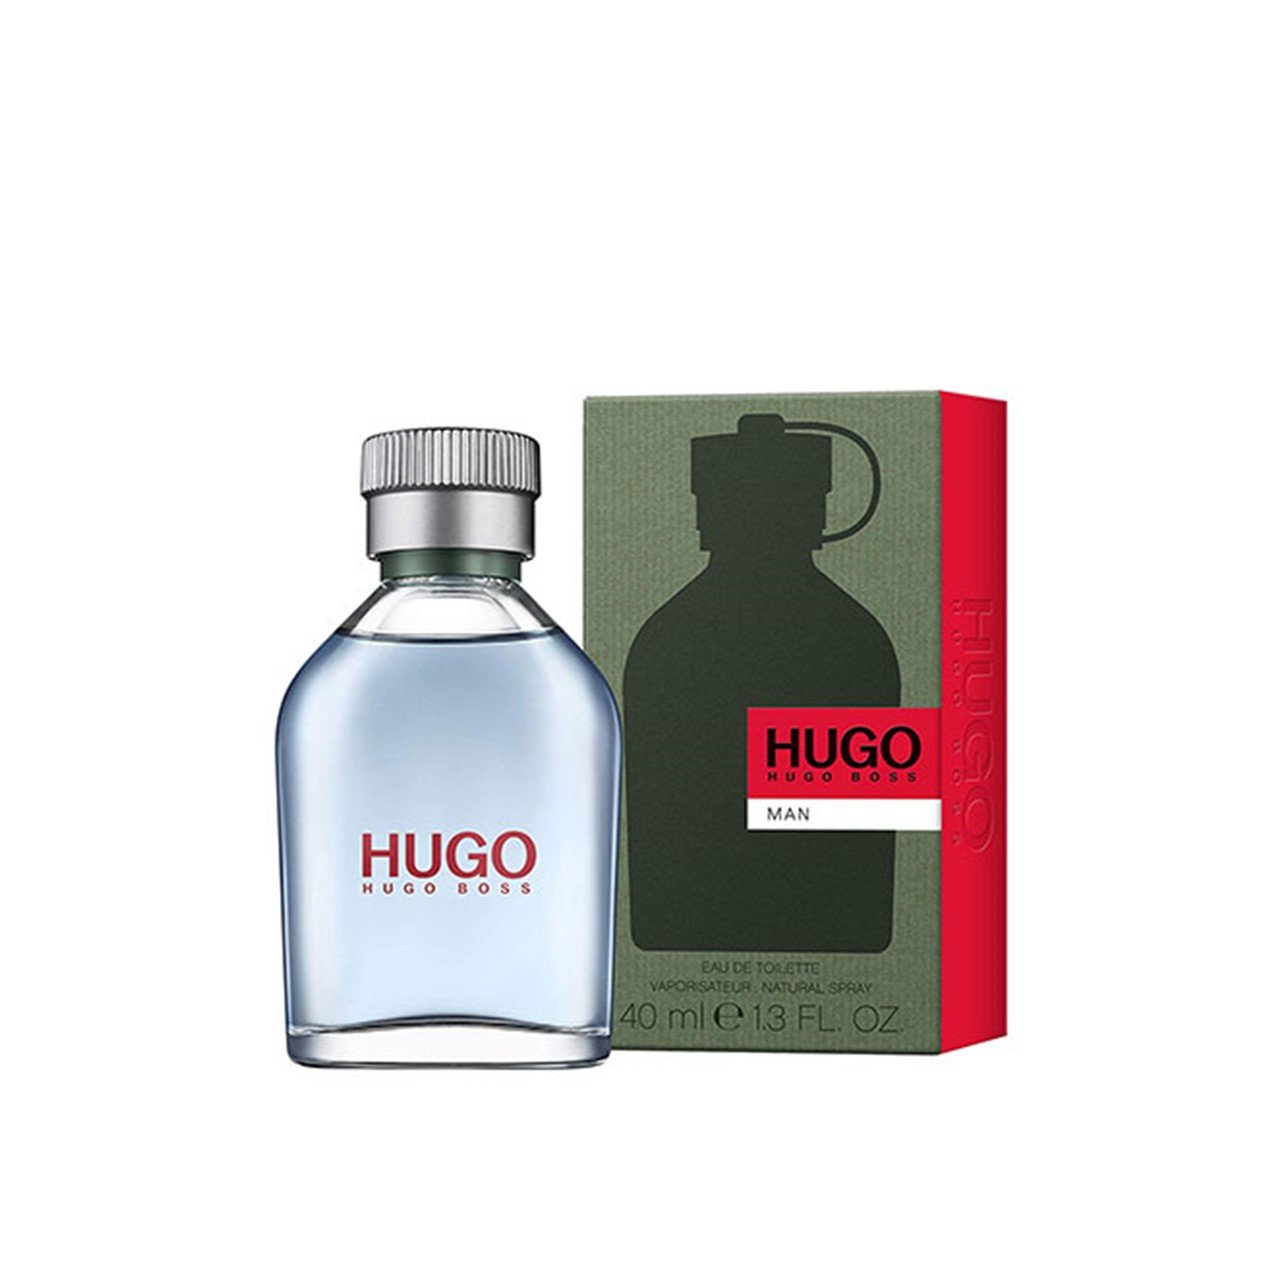 Hugo Boss Hugo Man Eau de Toilette 40ml (1.4fl oz)